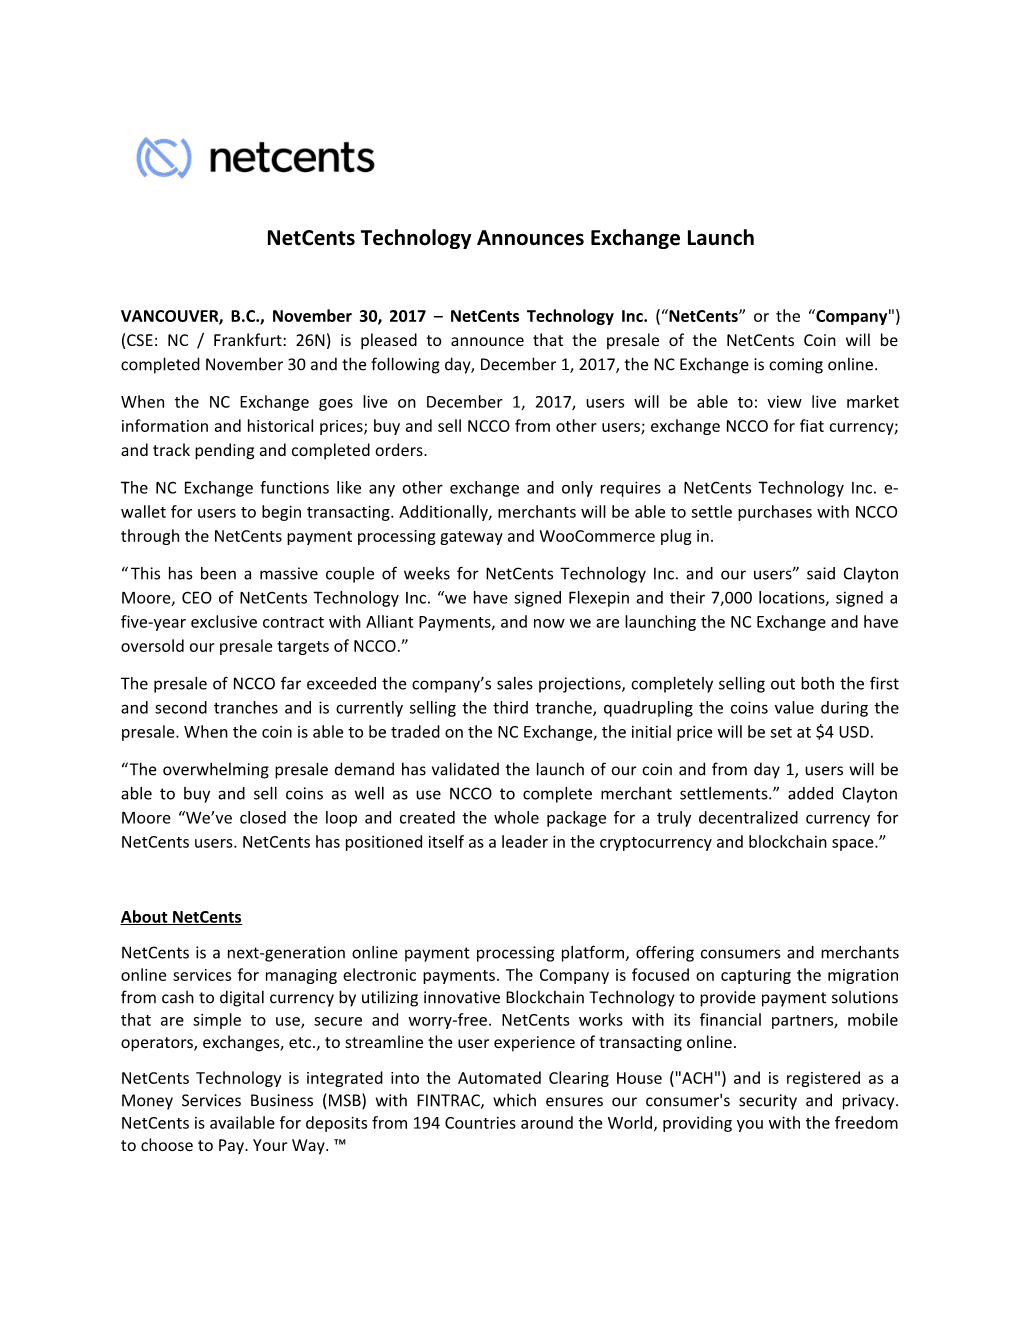 Netcents Technology Announces Exchange Launch